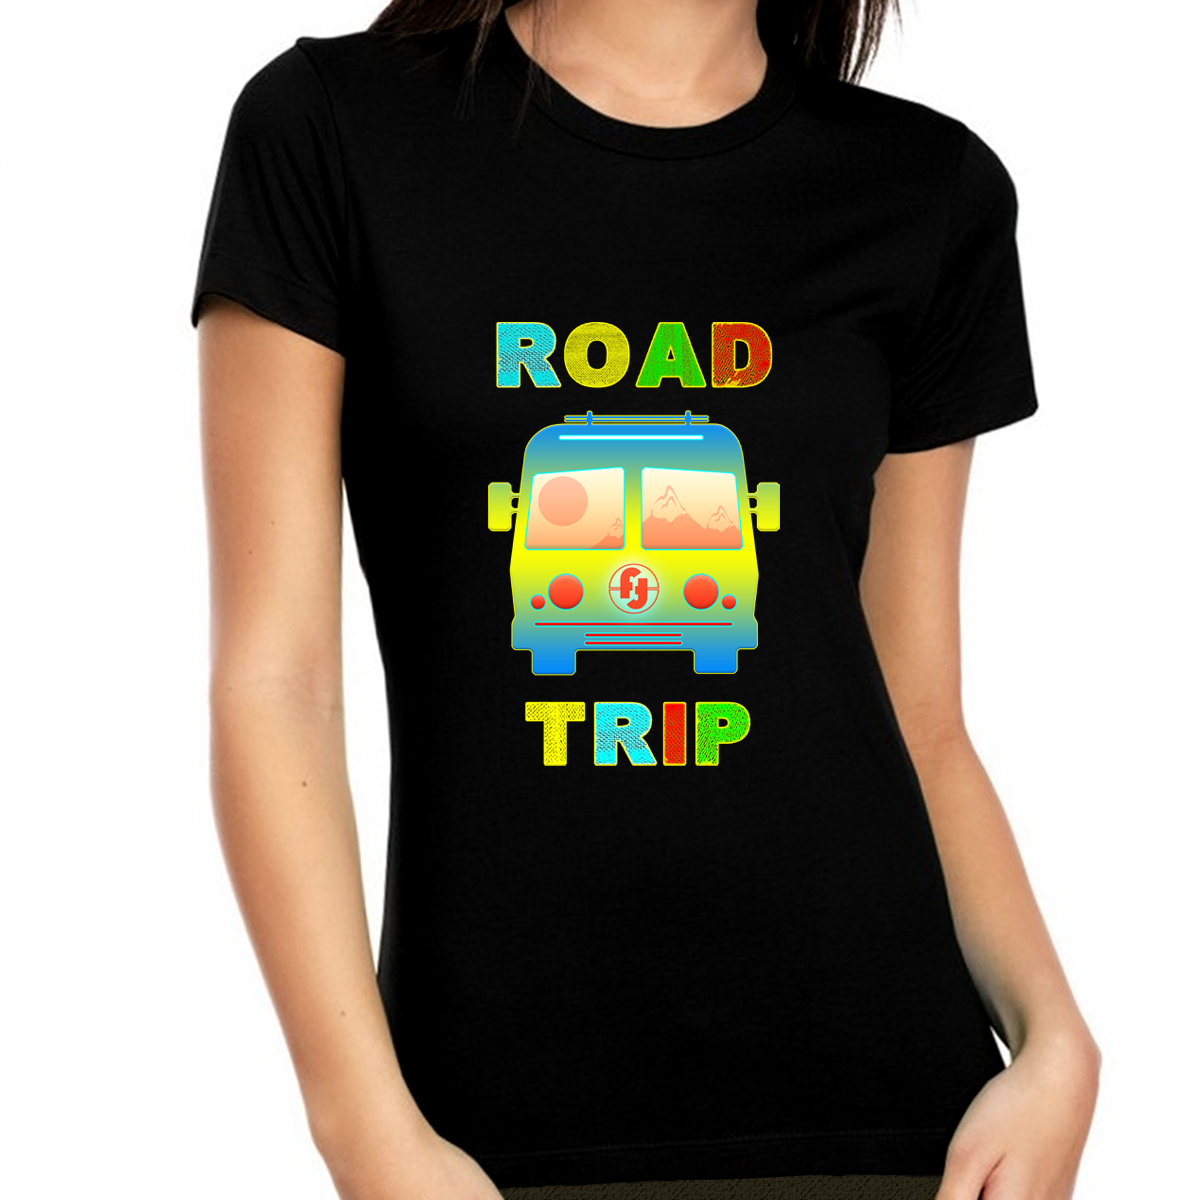 Road Trip Shirts for Women - Road Trip Shirt for Women - Summer Shirts for Women - Road Trip Gift